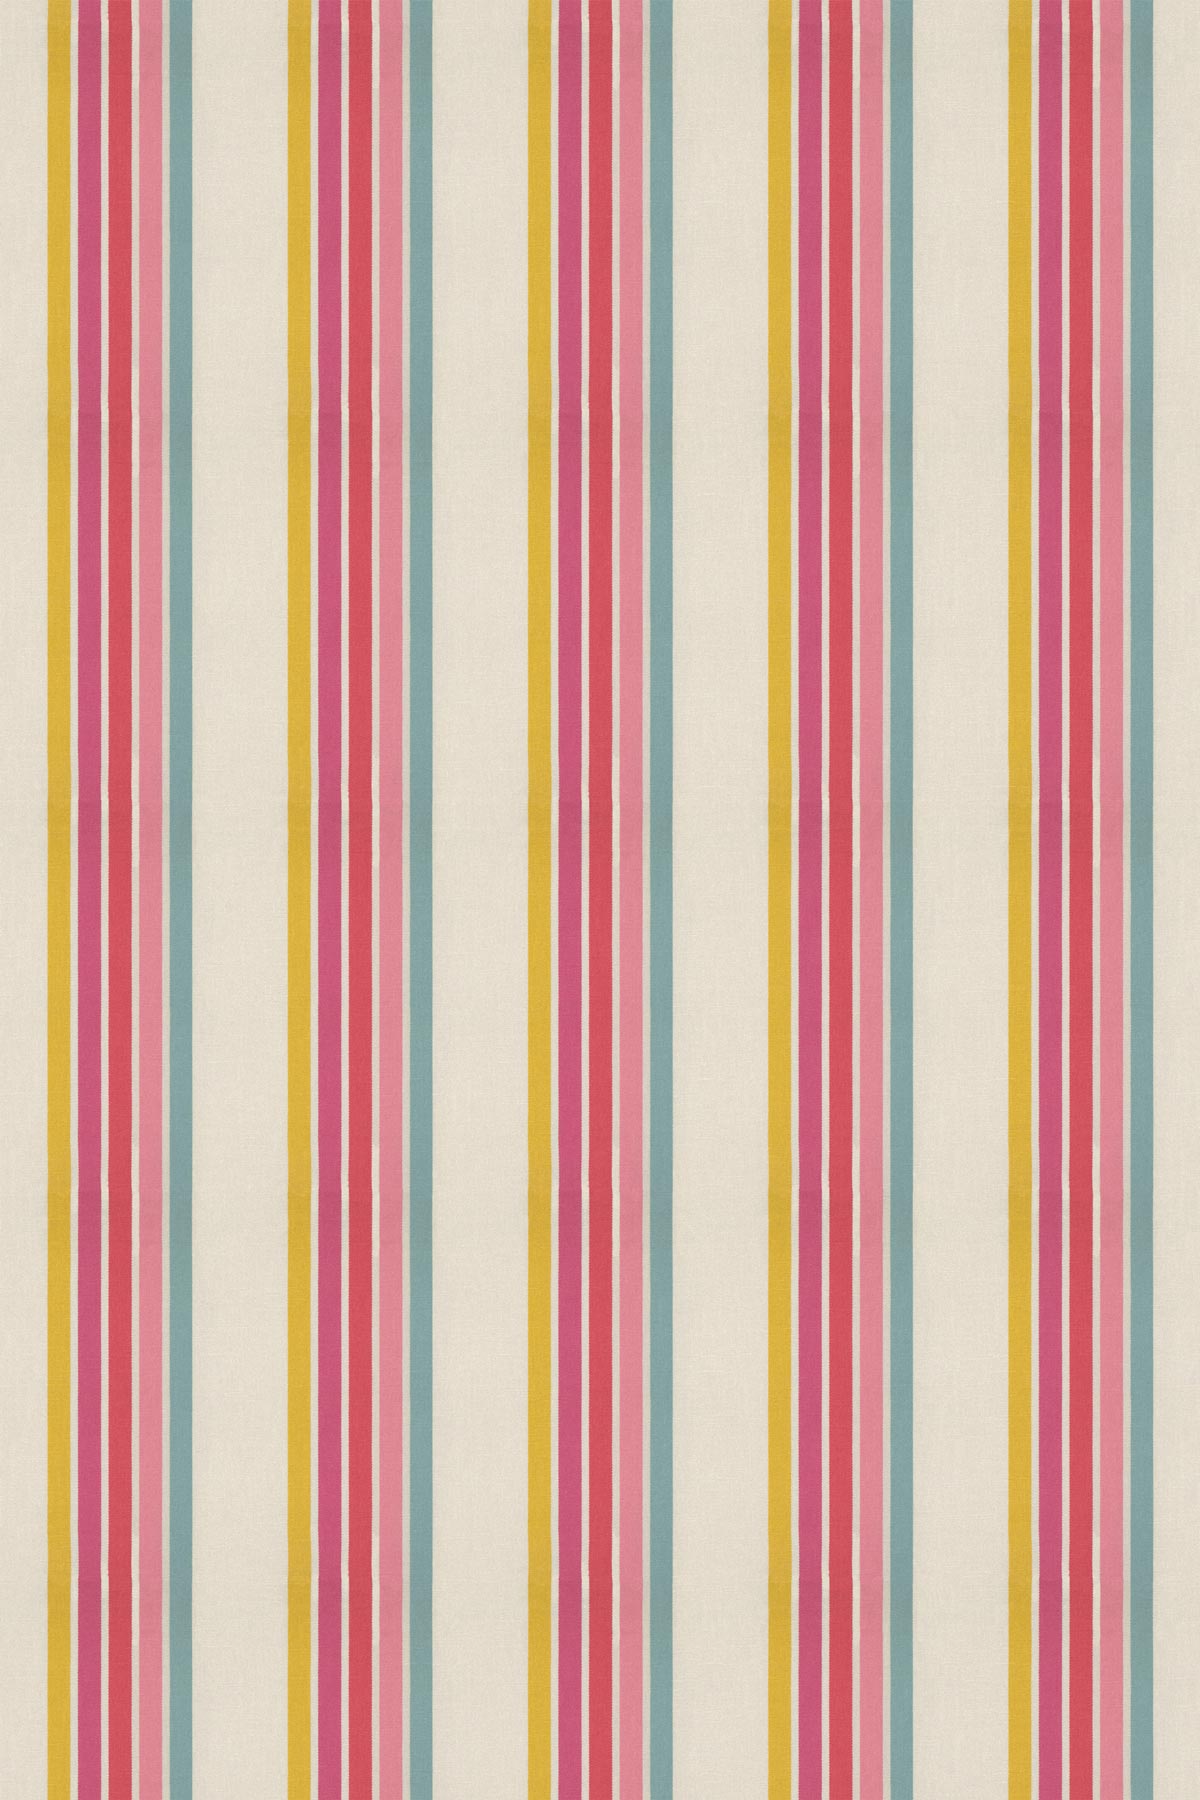 Helter Skelter Stripe Fabric - Cherry./ Blossom / Pineapple / Sky - by Harlequin